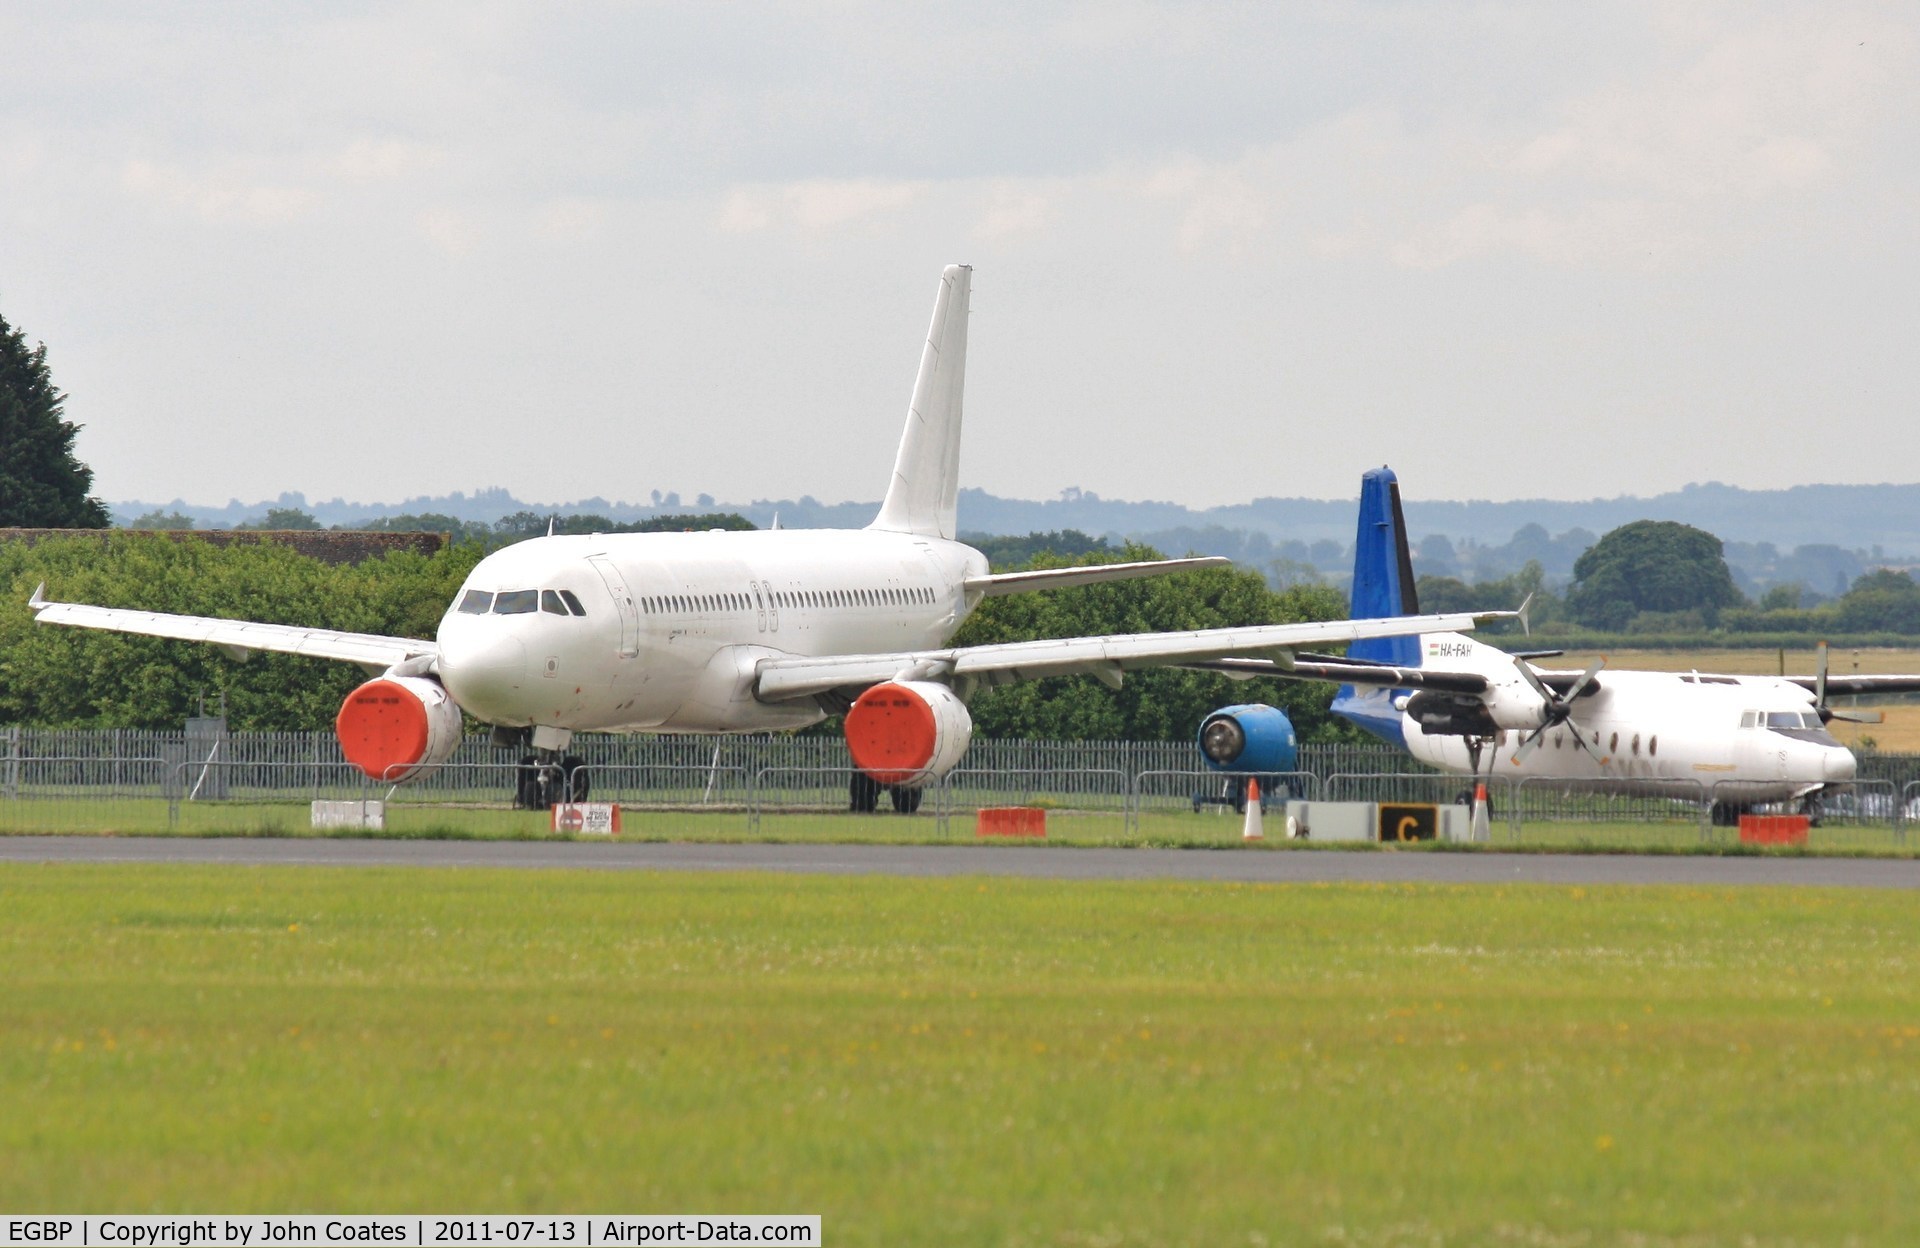 Kemble Airport, Kemble, England United Kingdom (EGBP) - Storage area with HA-FAH and un-reg'd A320